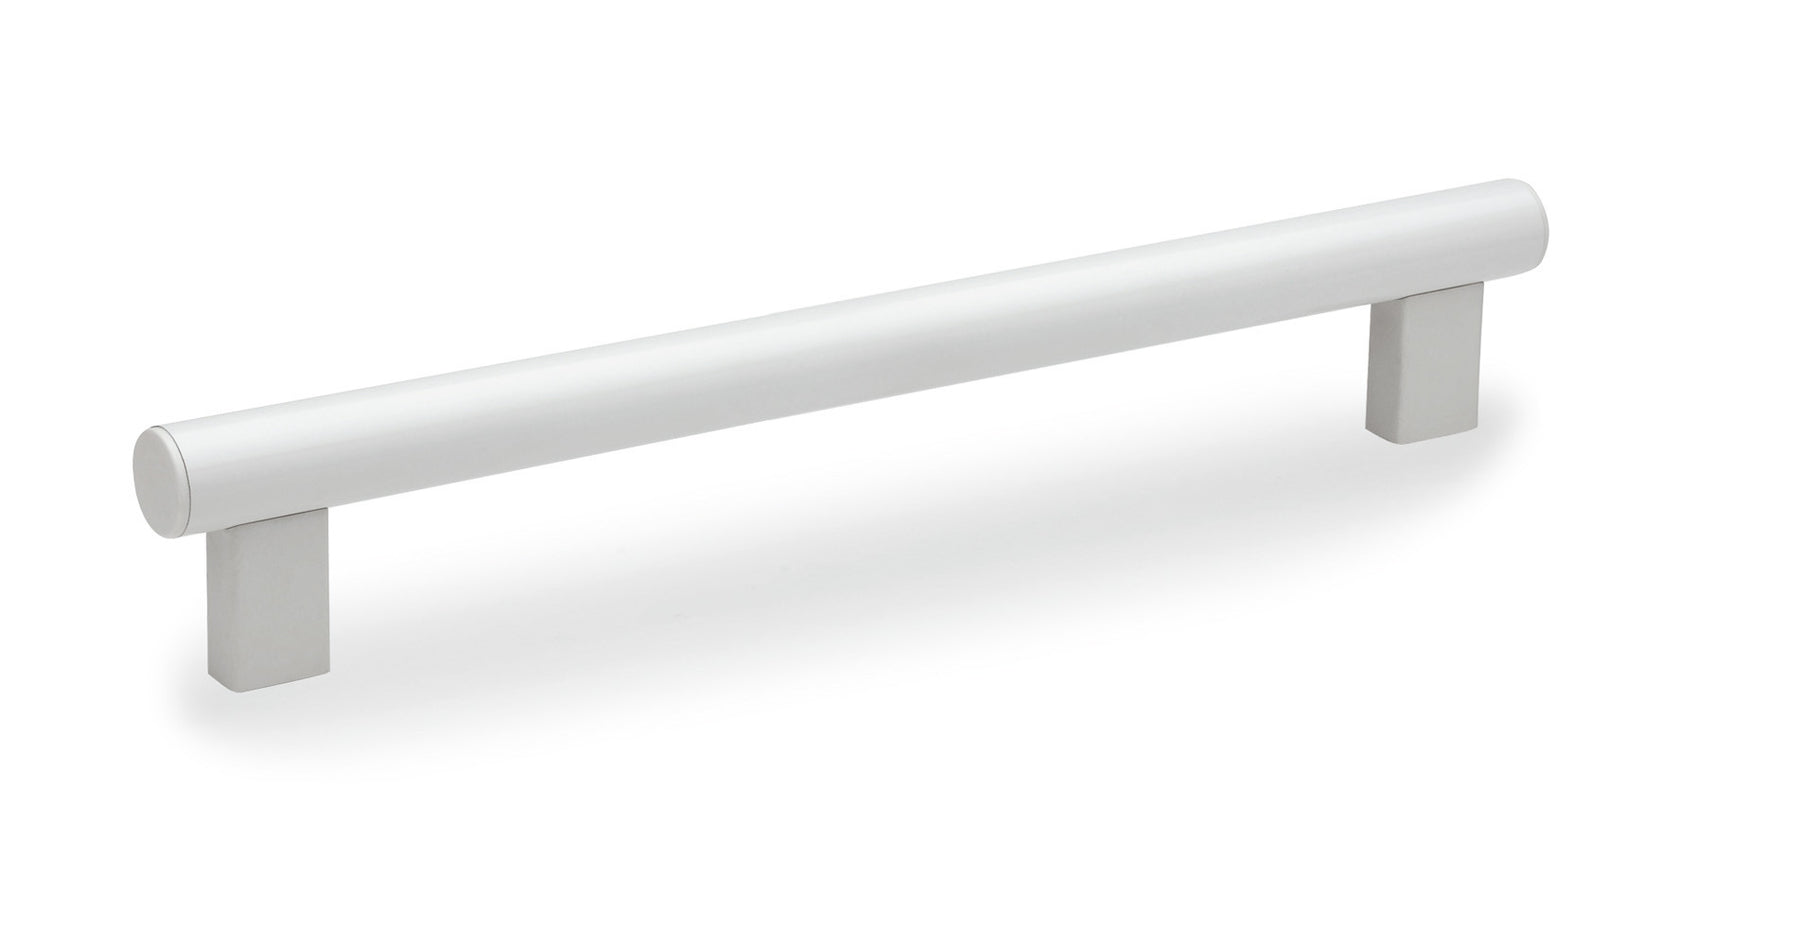 151513 M.1066 BM/30-350 CLEAN Elesa Clean Series Aluminum Tubular Handle with White Epoxy Coating Threaded M8